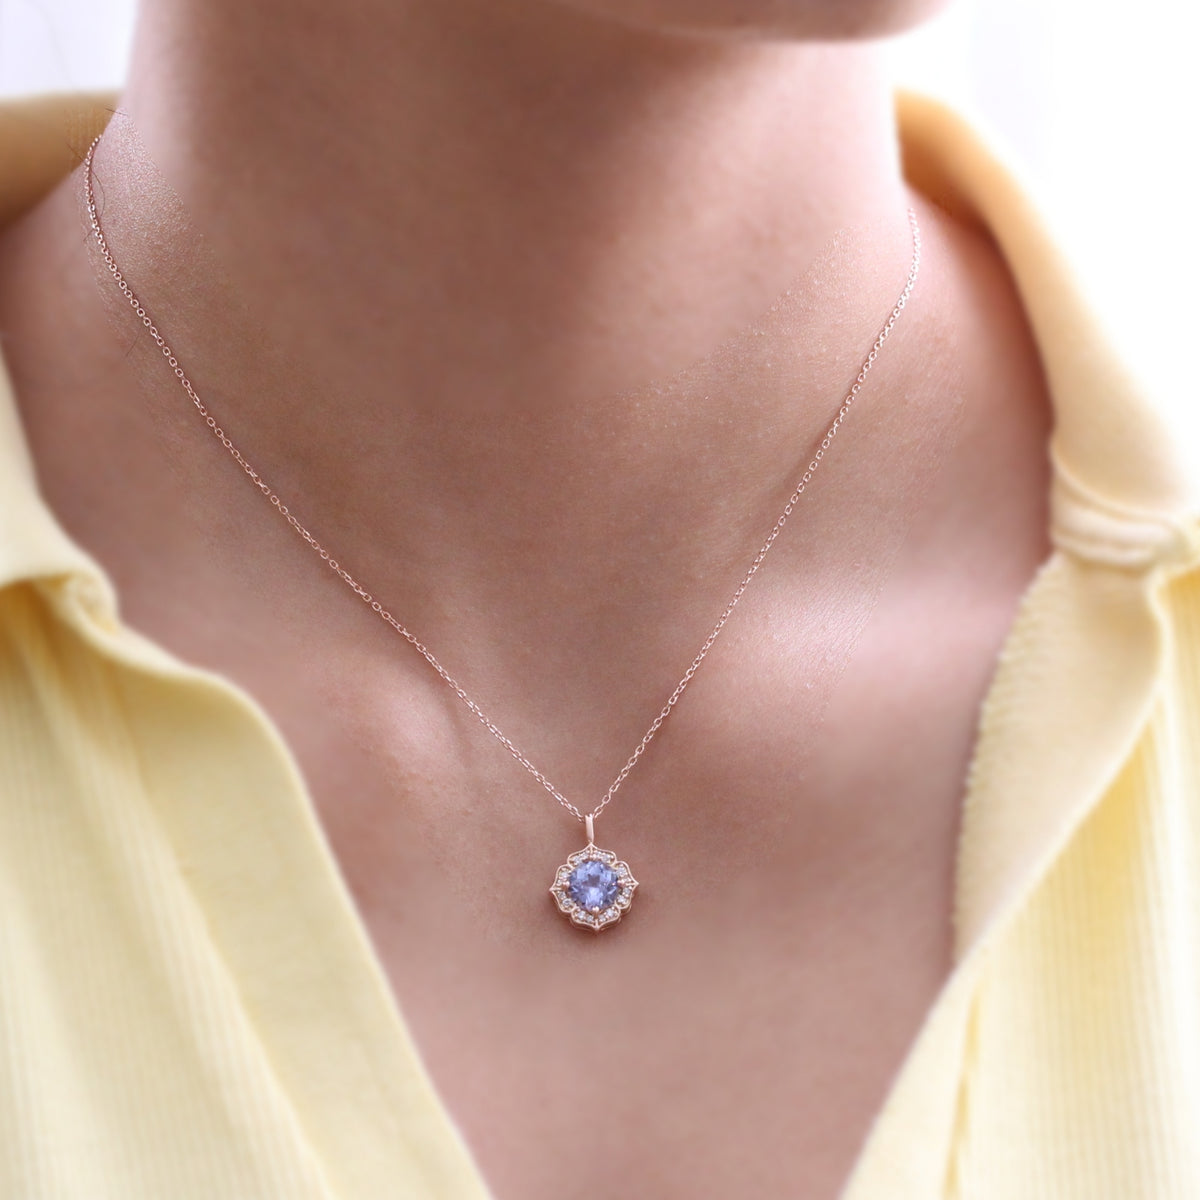 Lavender sapphire necklace rose gold vintage floral diamond and sapphire pendant la more design jewelry